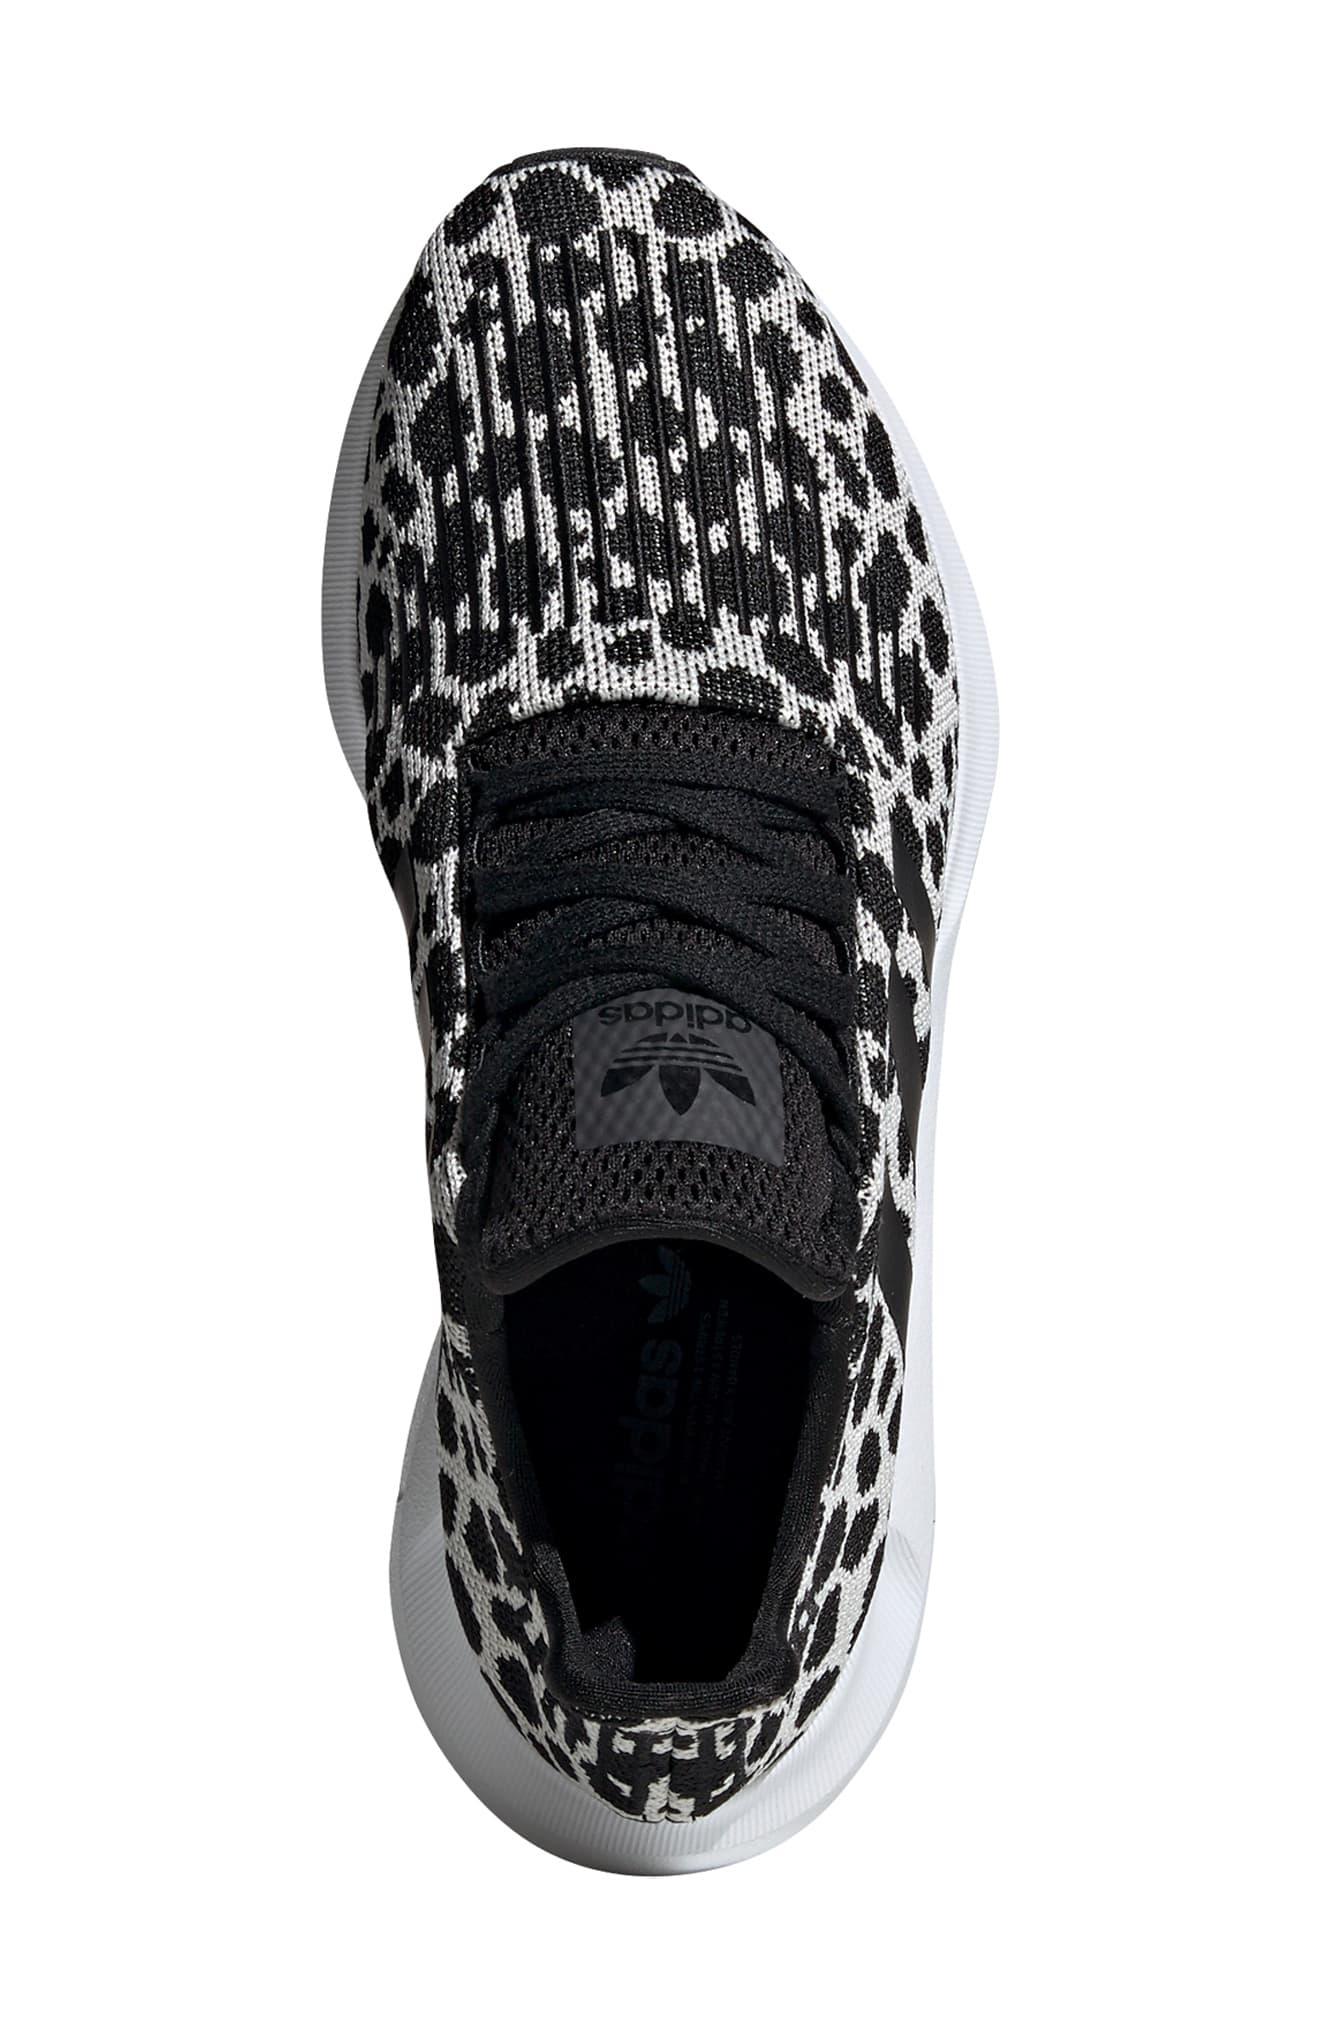 adidas swift run cheetah